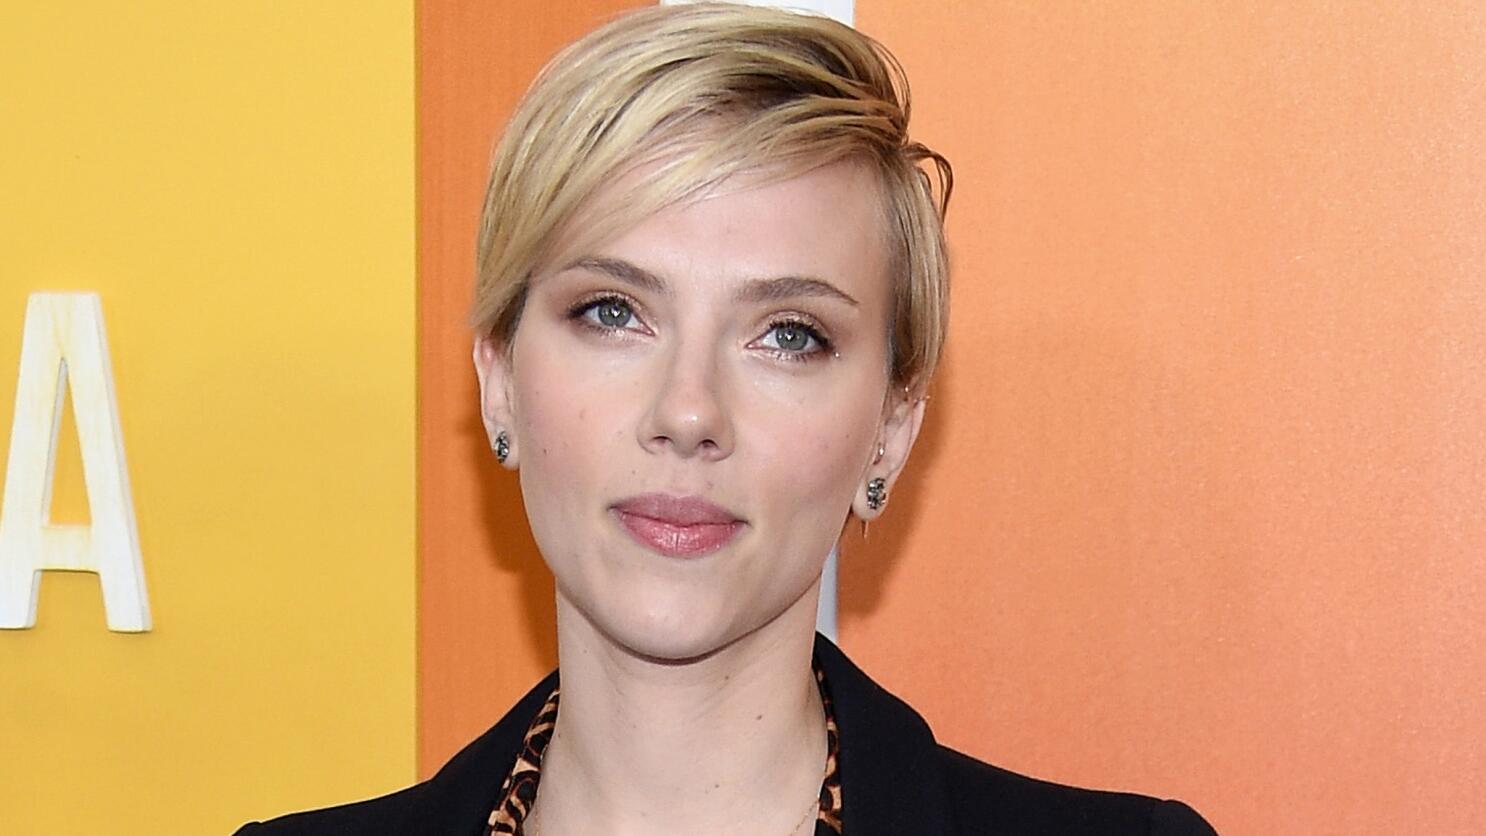 Top 10 Must-Watch Movies Starring Scarlett Johansson